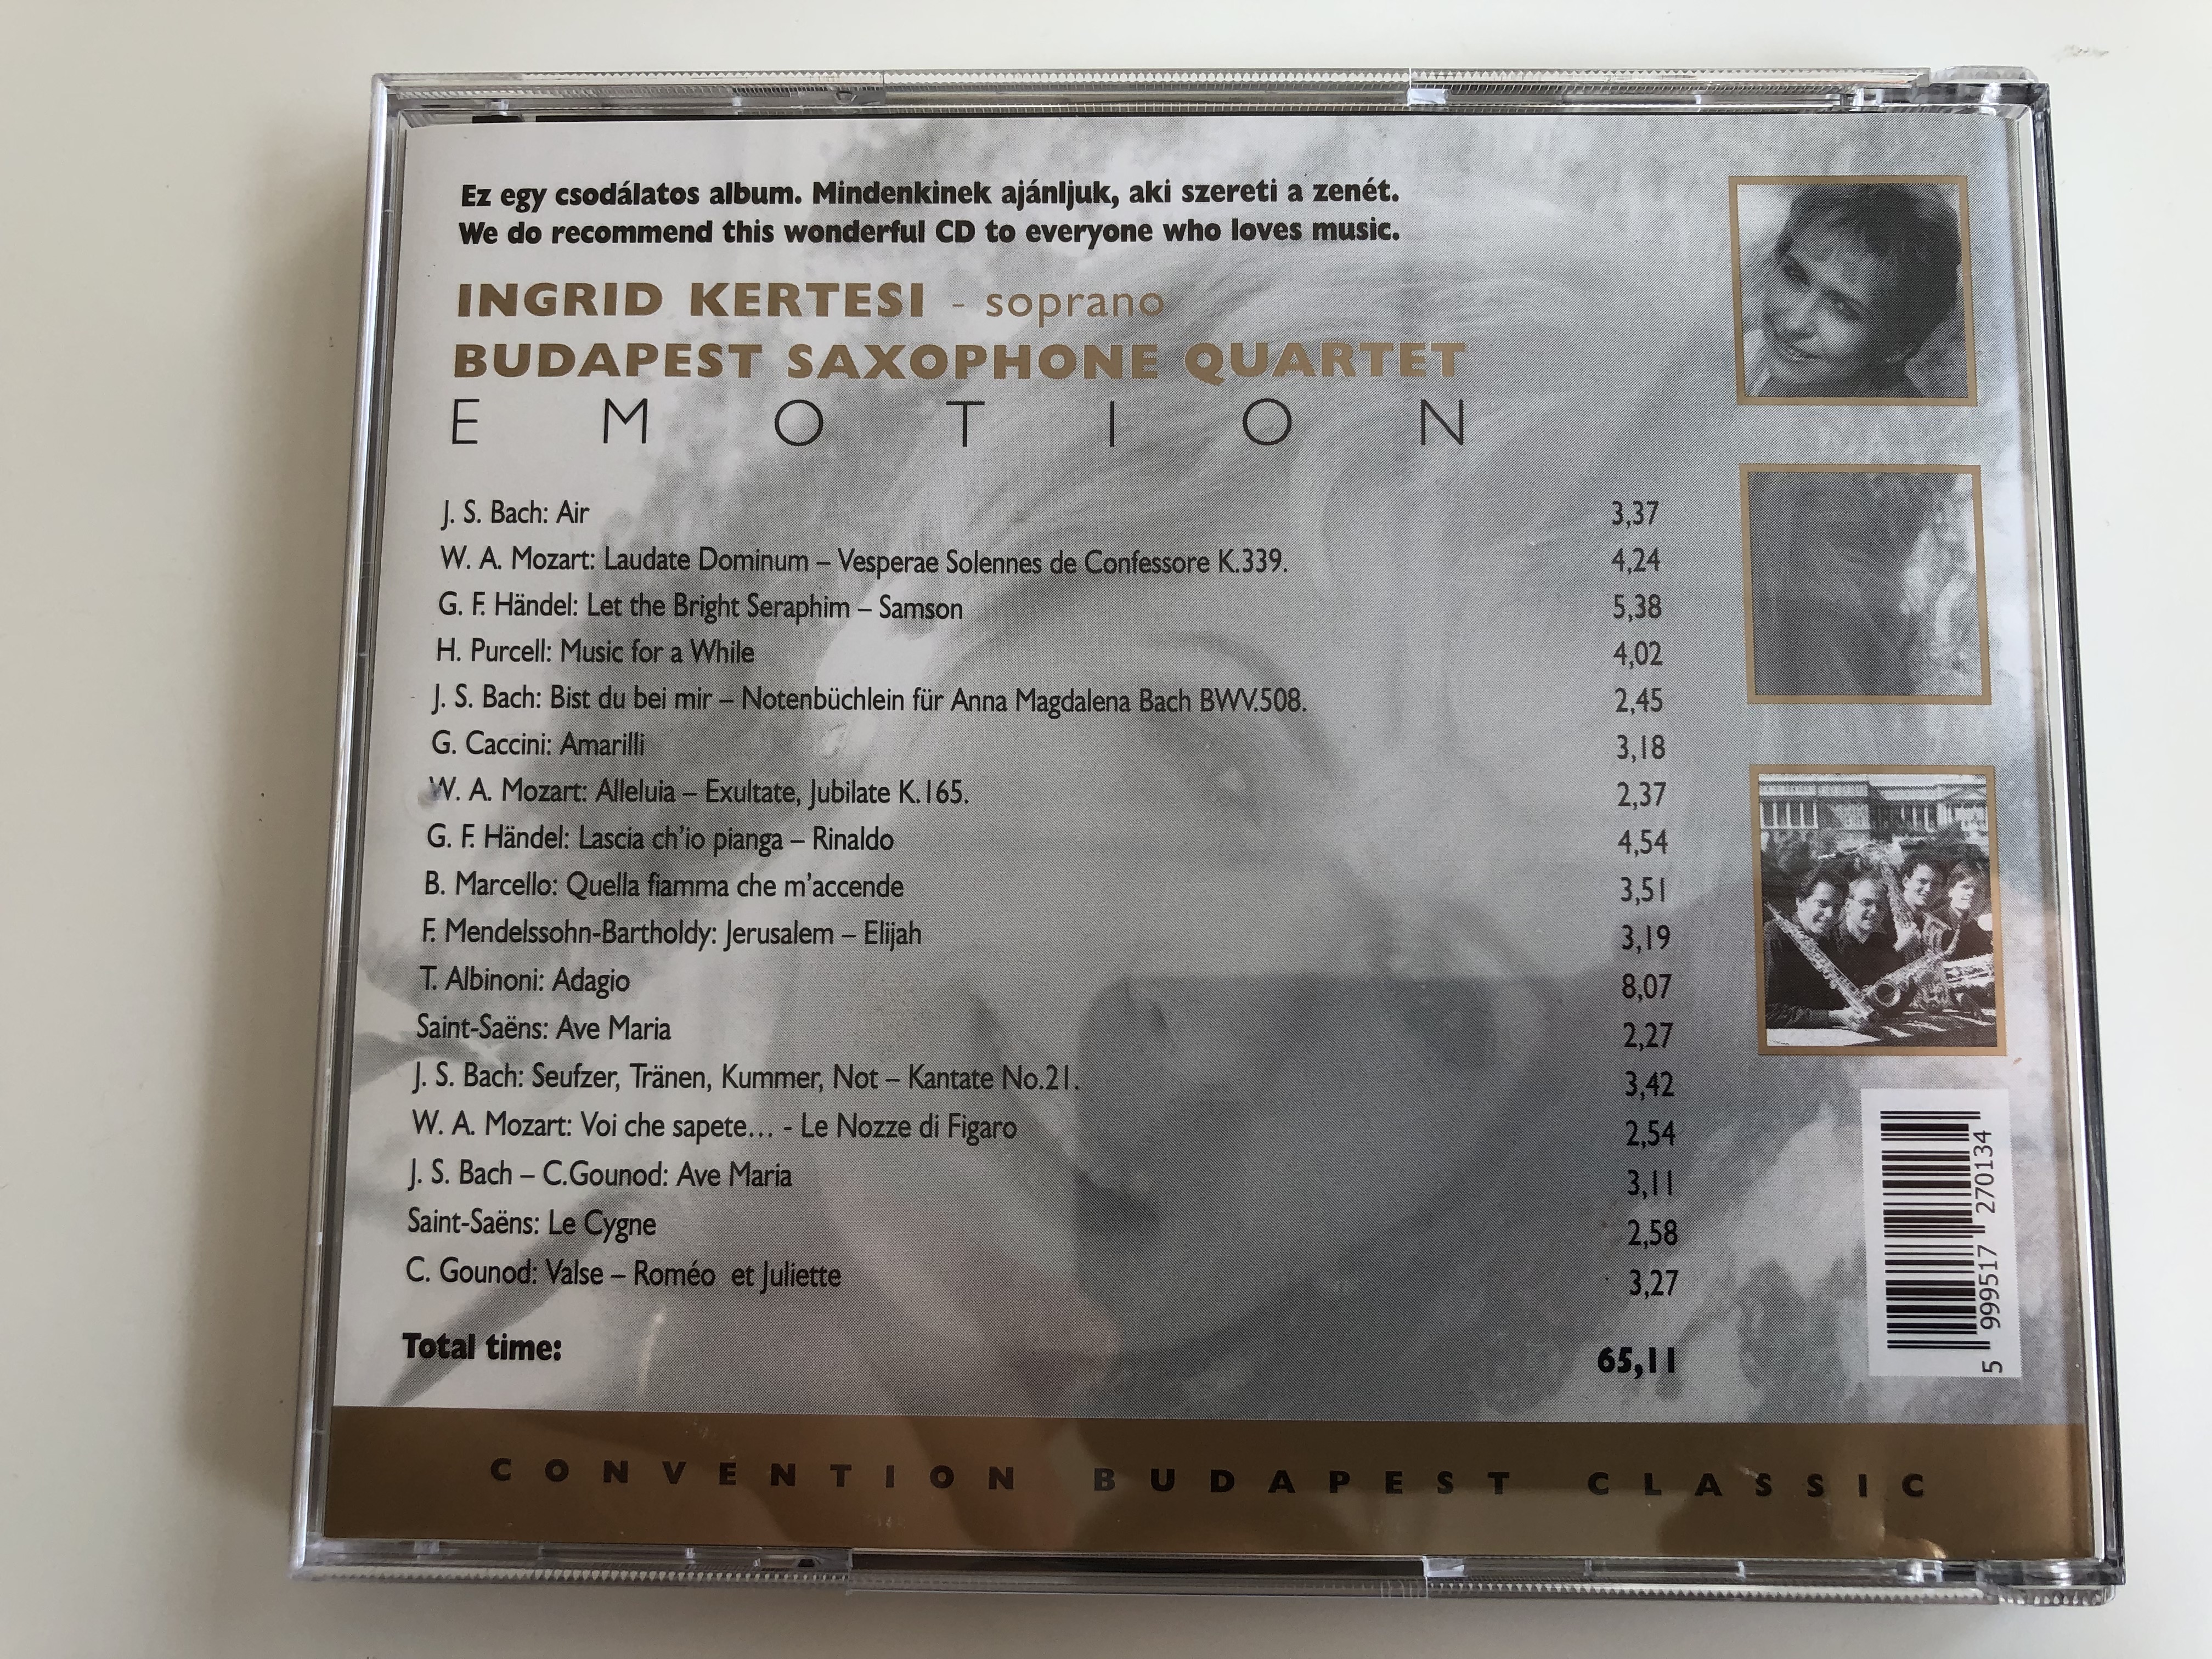 ingrid-kertesi-soprano-budapest-saxophone-quartet-emotion-convention-budapest-classics-audio-cd-2002-cbp-013-7-.jpg